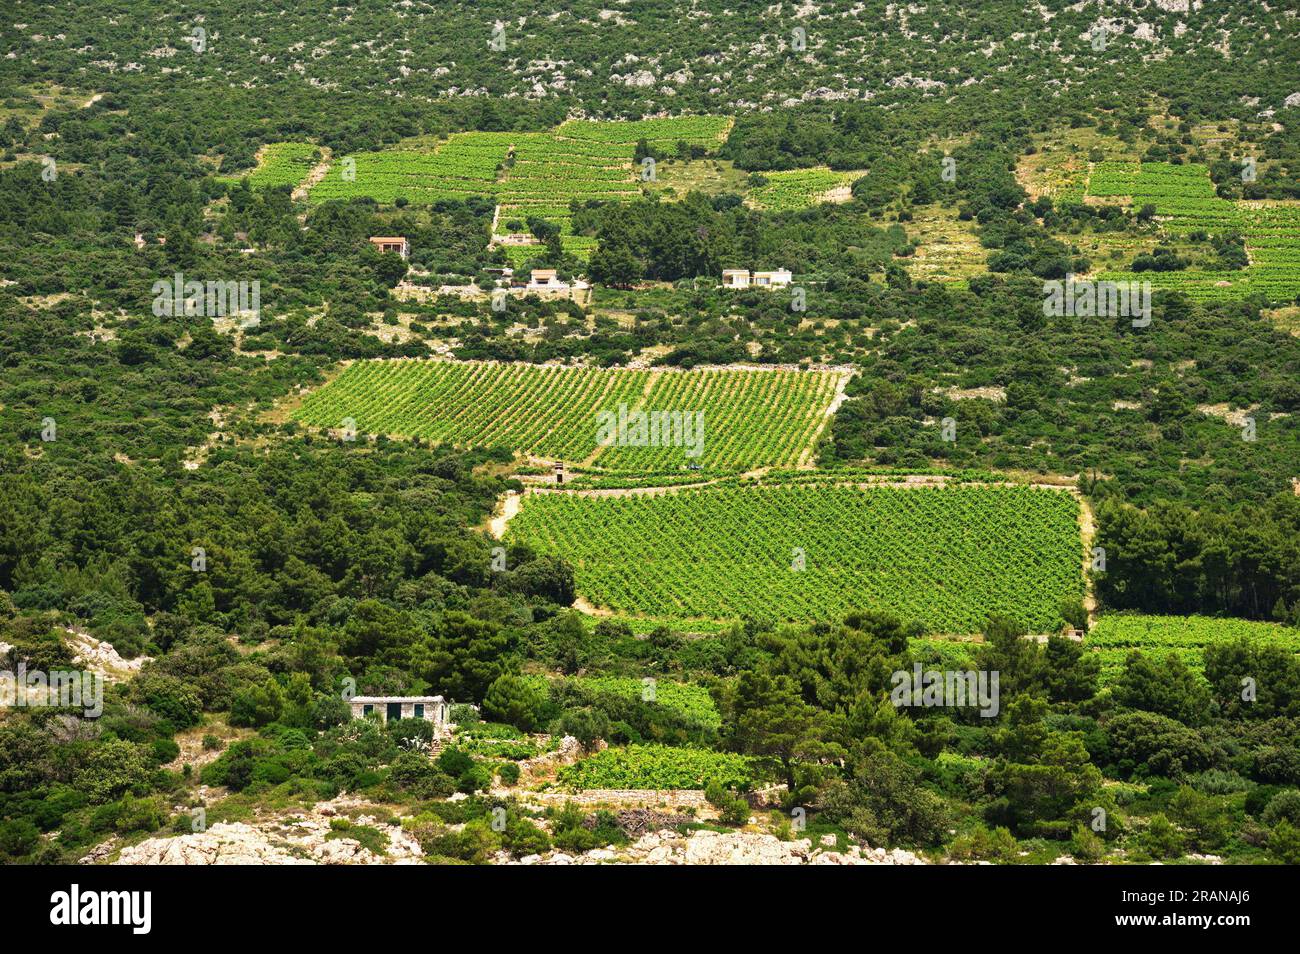 Slope of Peljesac peninsula in Croatia with famous vineyards of Dingac grapes Stock Photo